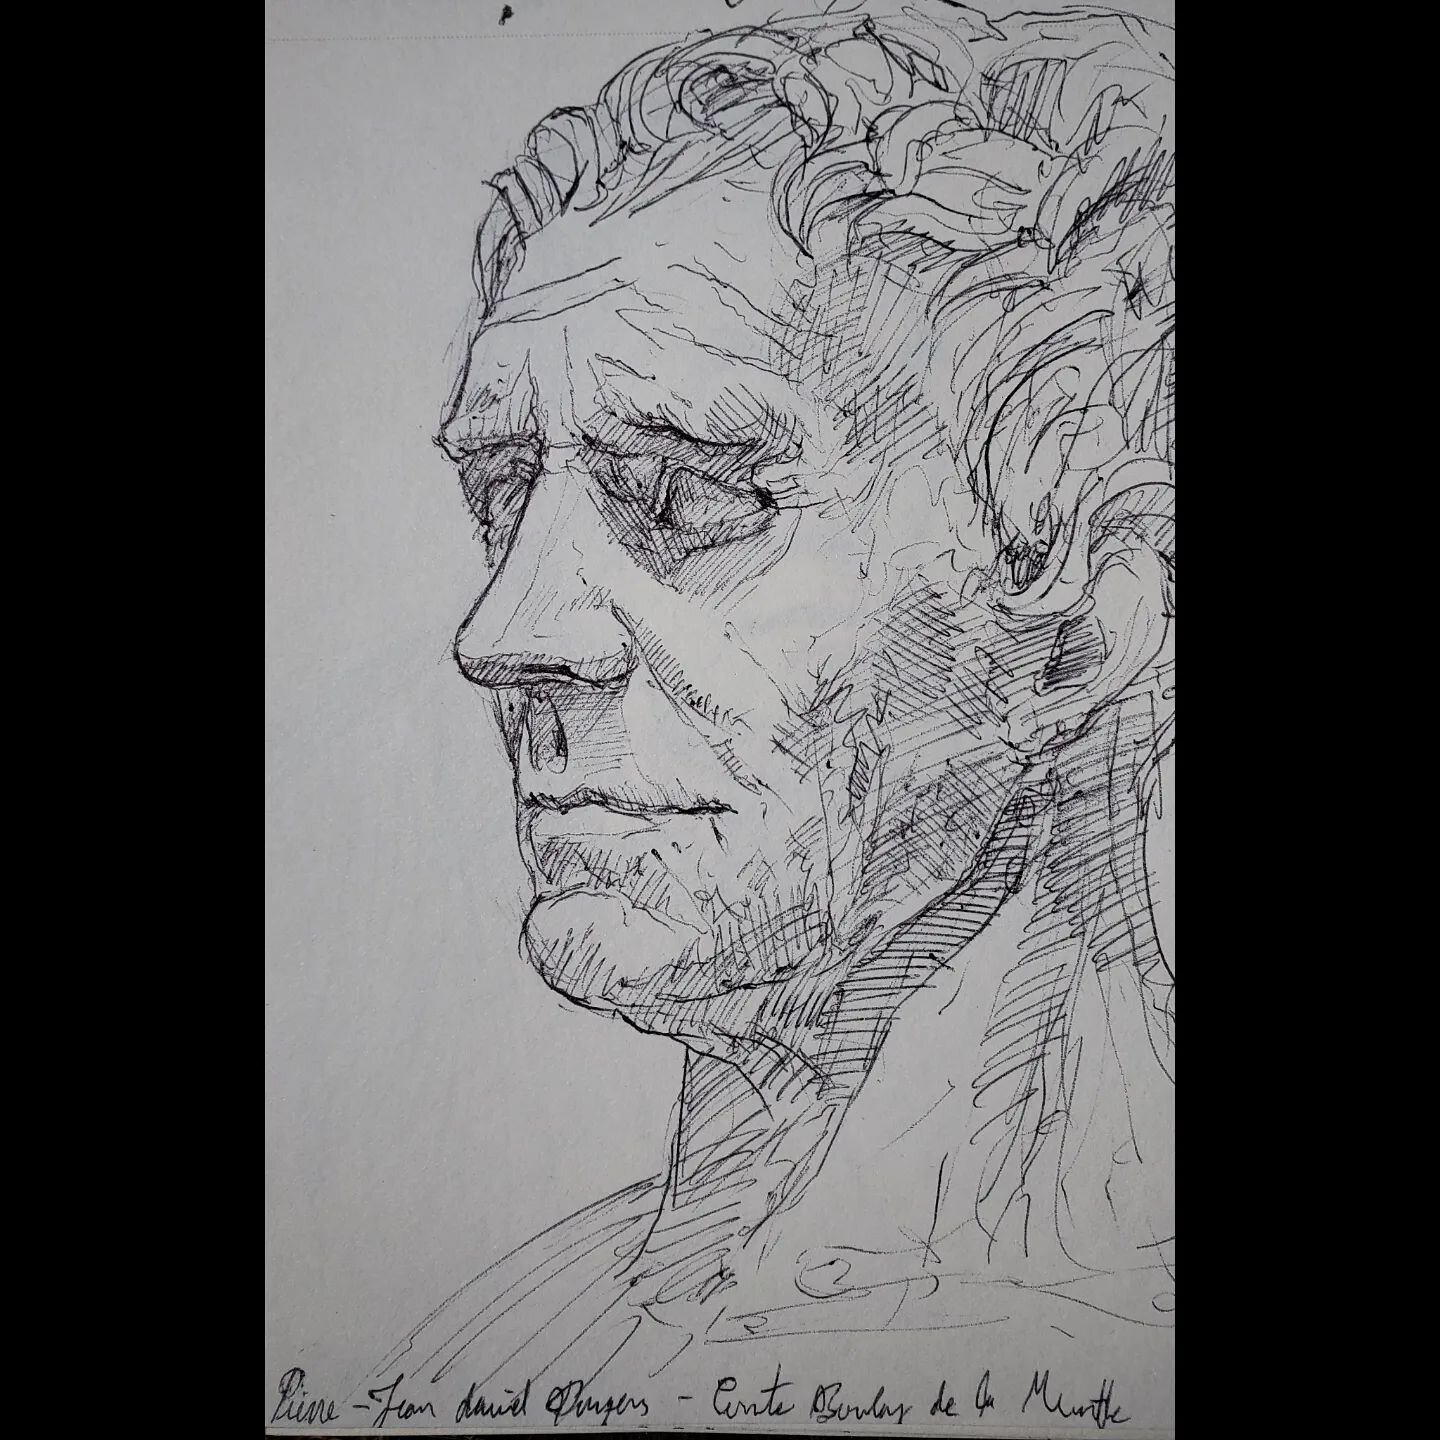 15 minute study at National Gallery of Art in DC
.
&quot;Comte Boulay de la Meurthe&quot; by Pierre-Jean David dangers
. 
.
.
#cameronbyeart #nationalgalleryofart #artstudy #sketchbook #sketching #sketch #pen #portrait #bust